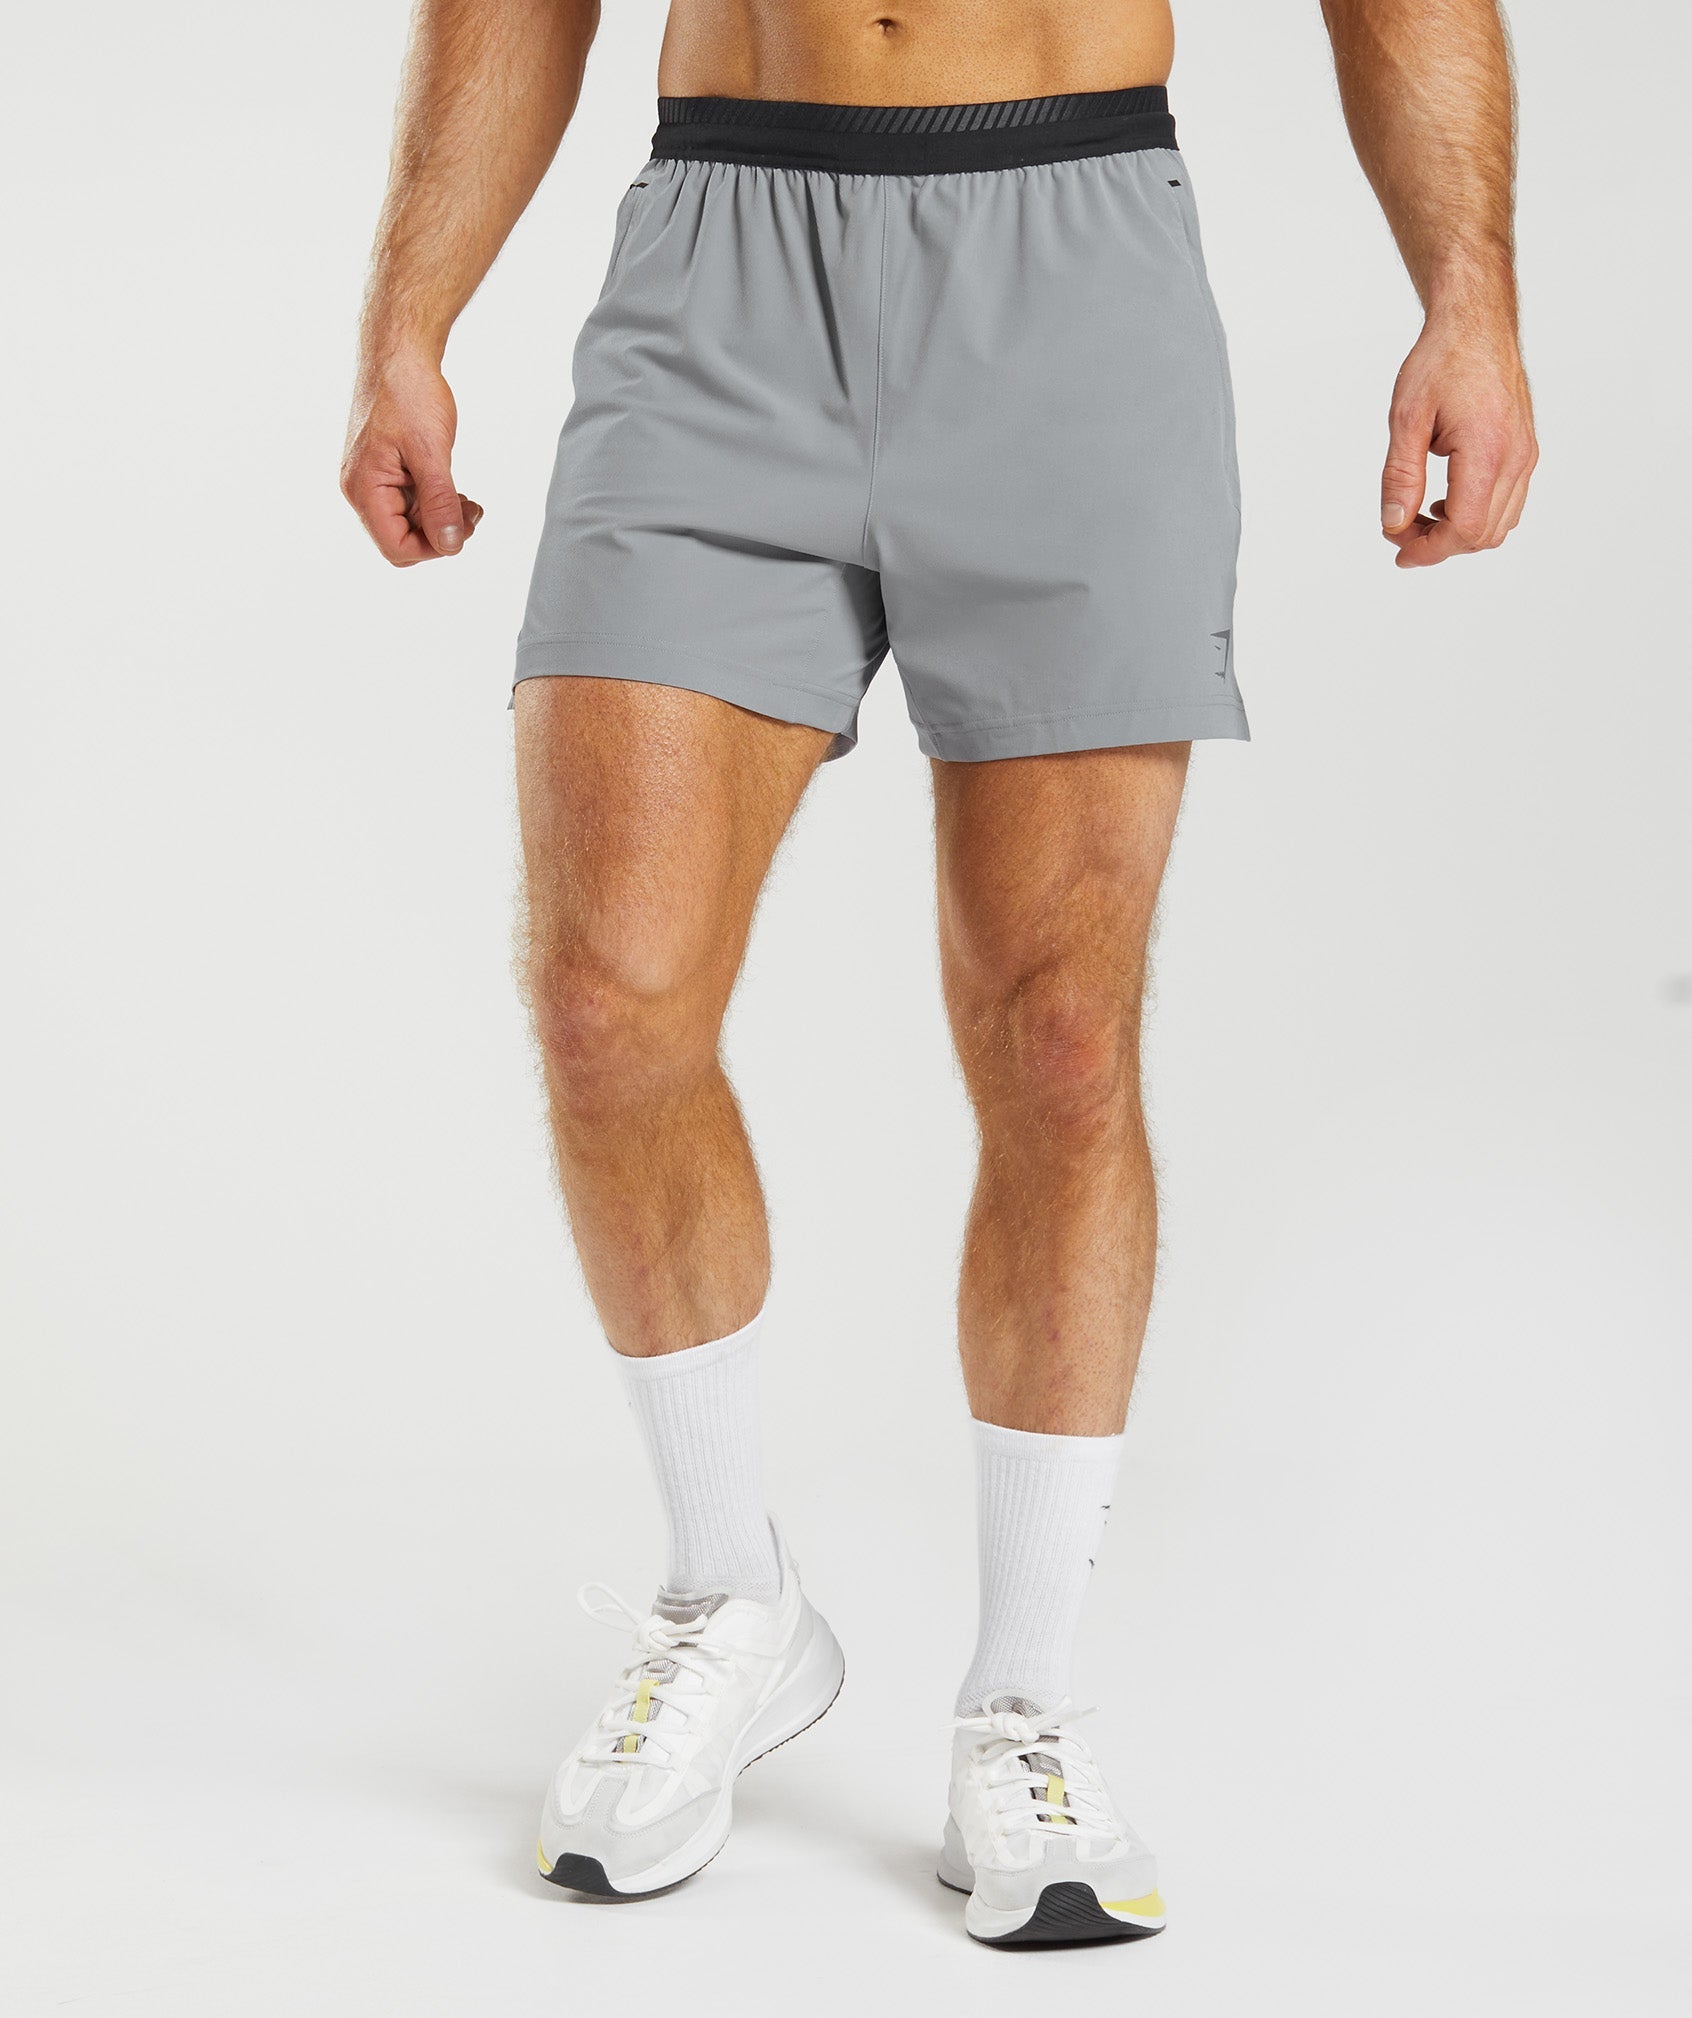 Apex 5" Hybrid Shorts in Drift Grey - view 1